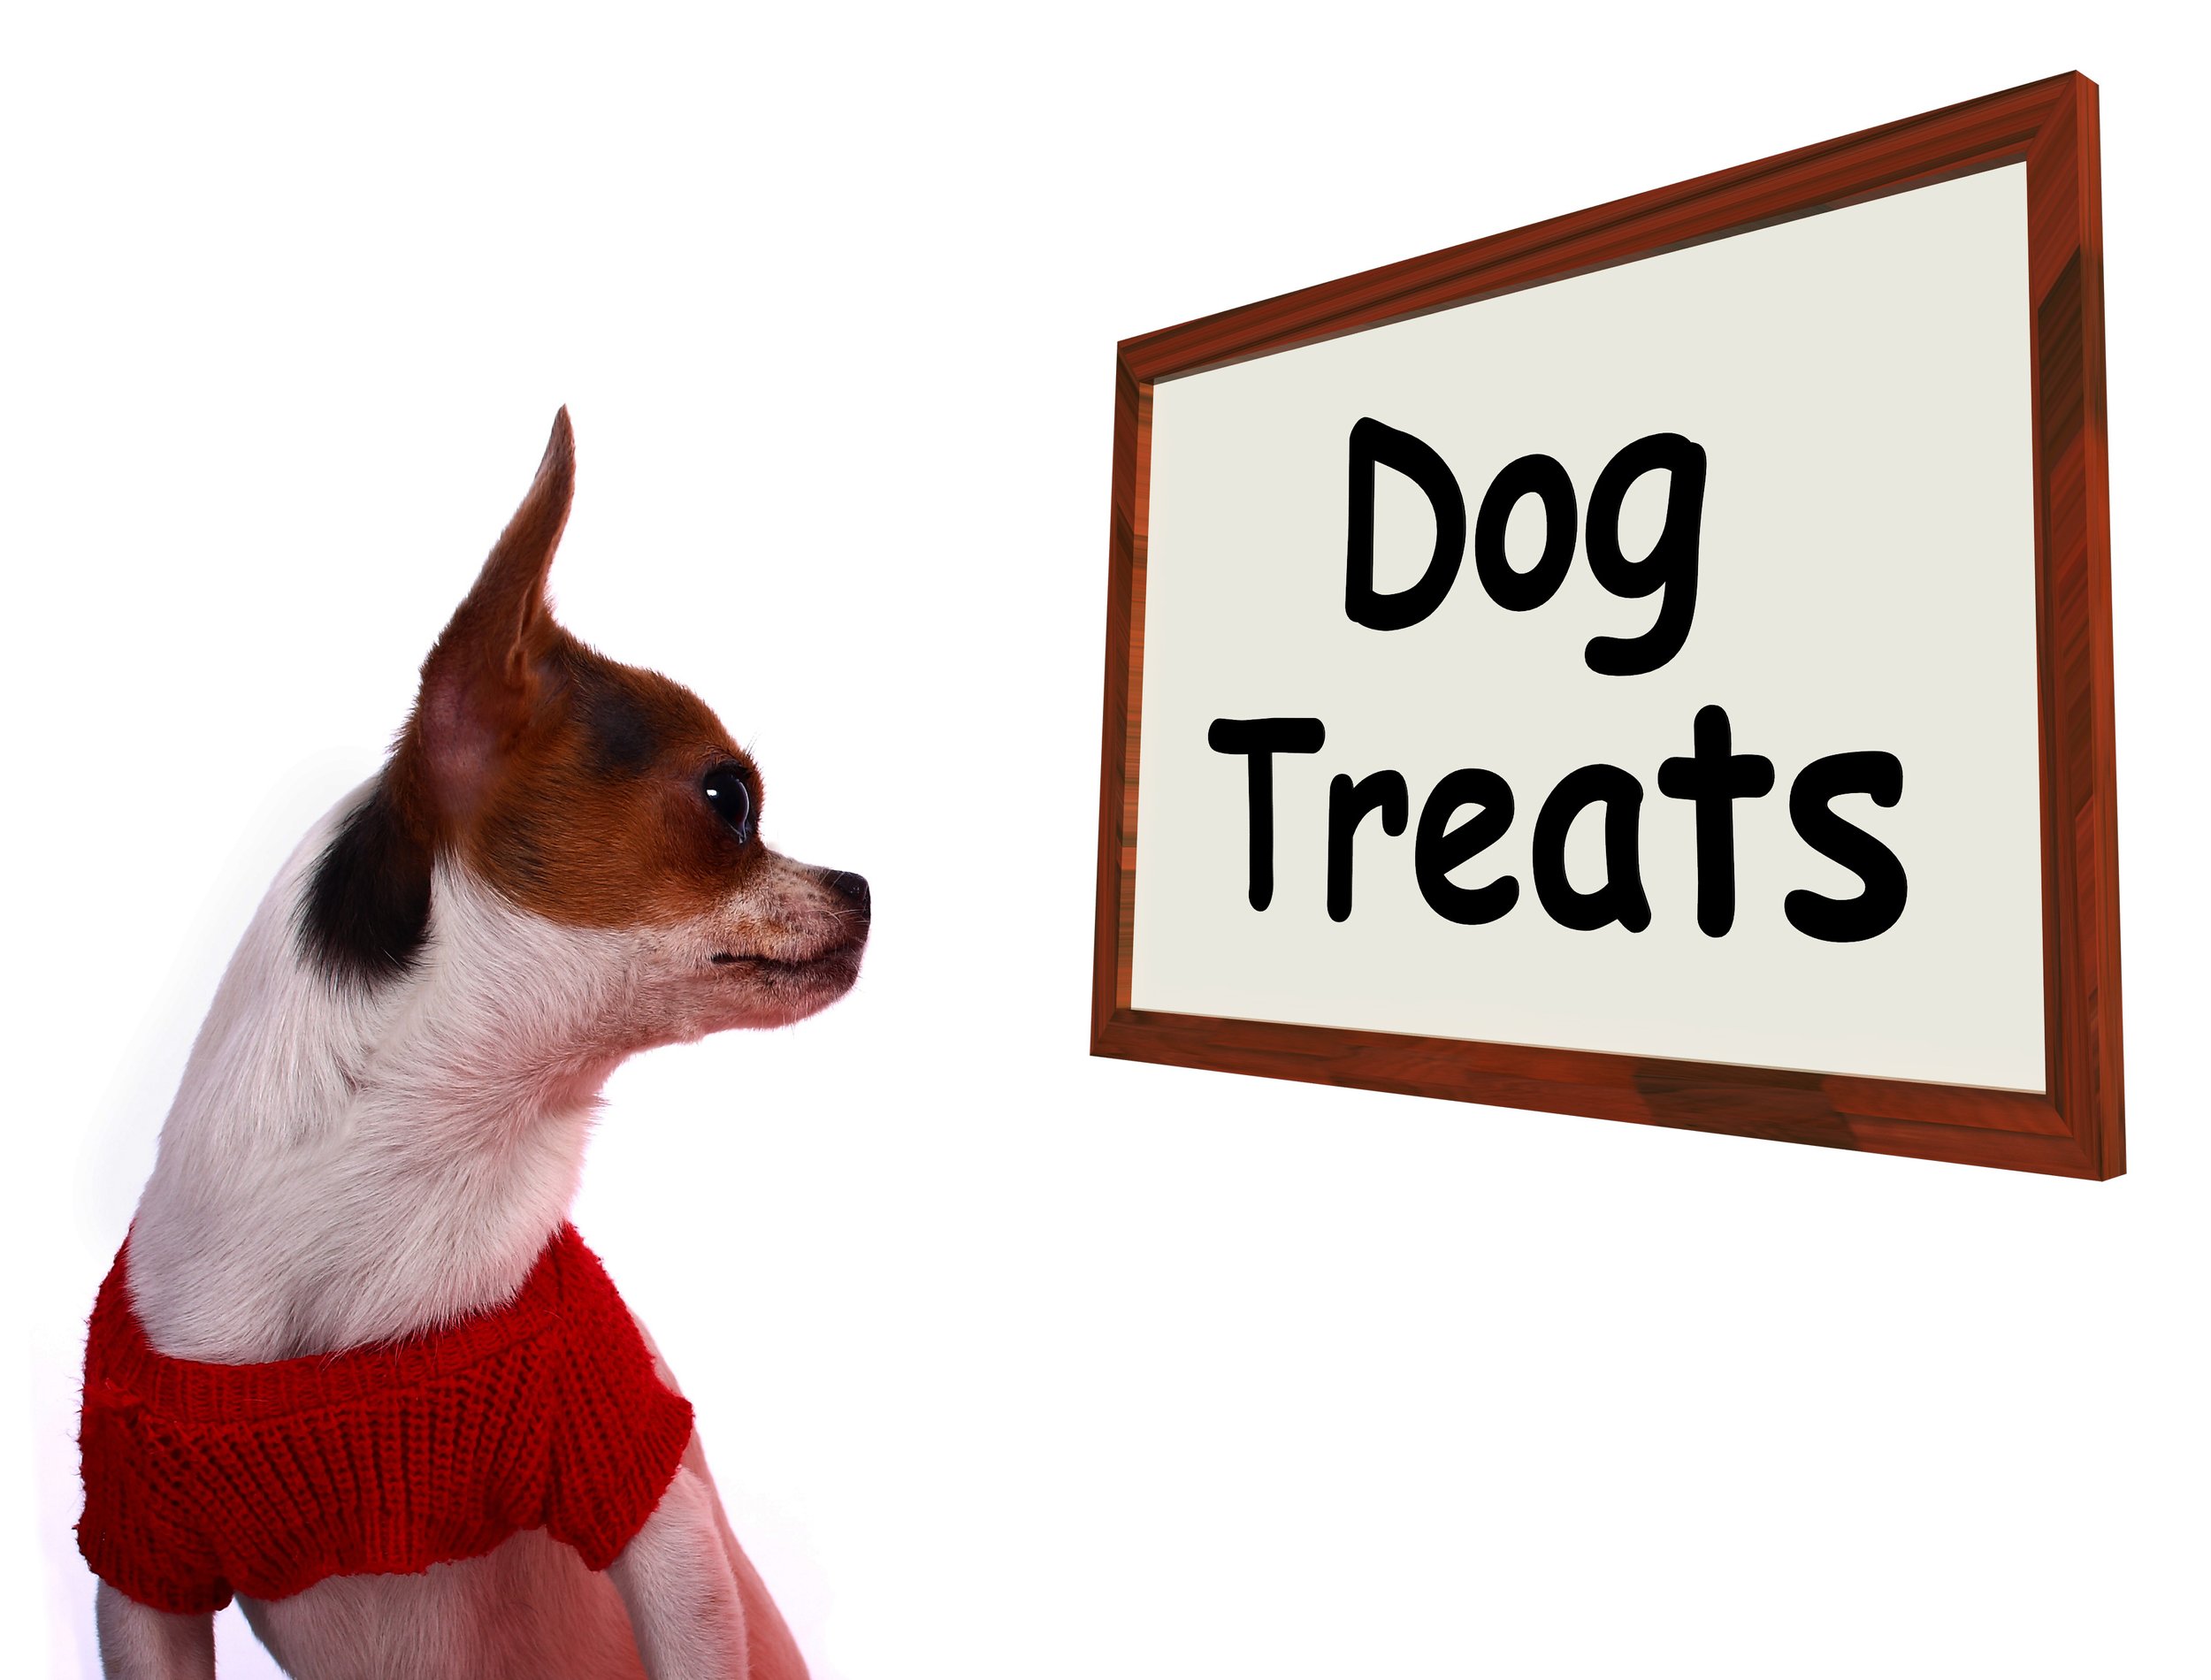 dog-treats-sign-showing-canine-rewards-or-snacks-SBI-300186295.jpg